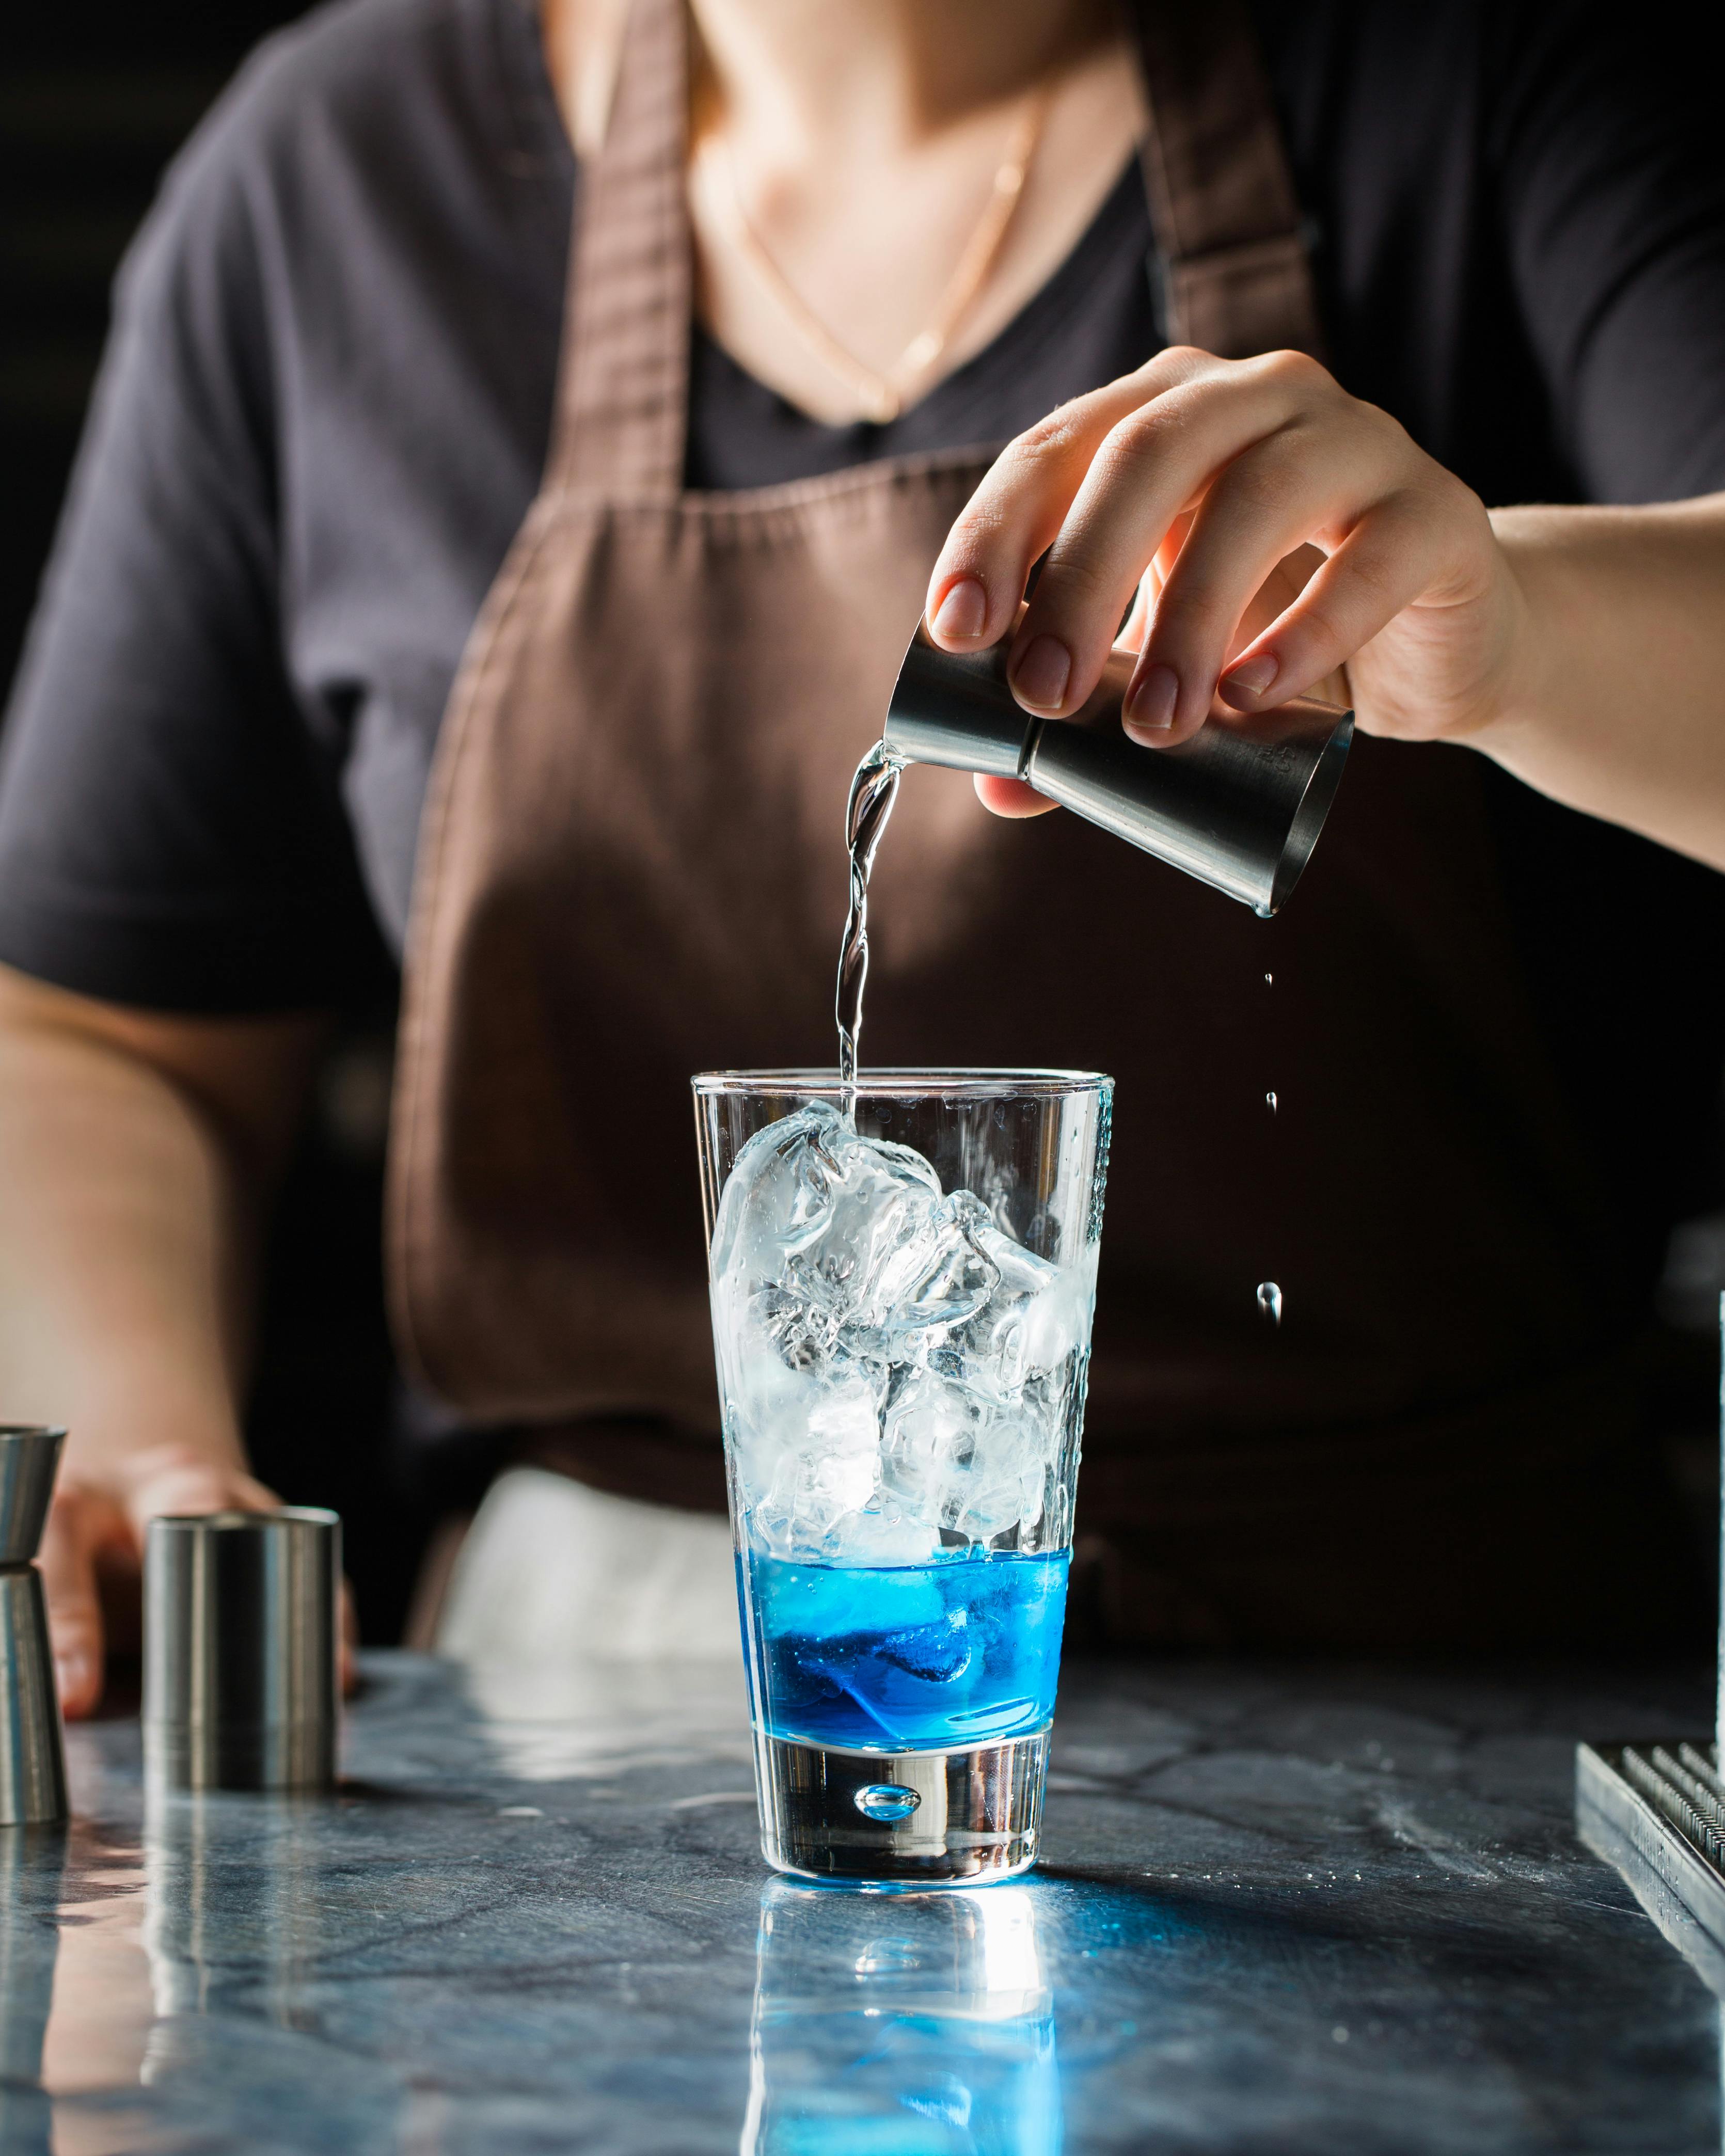 Bartender mixing drinks | Photo: Pexels